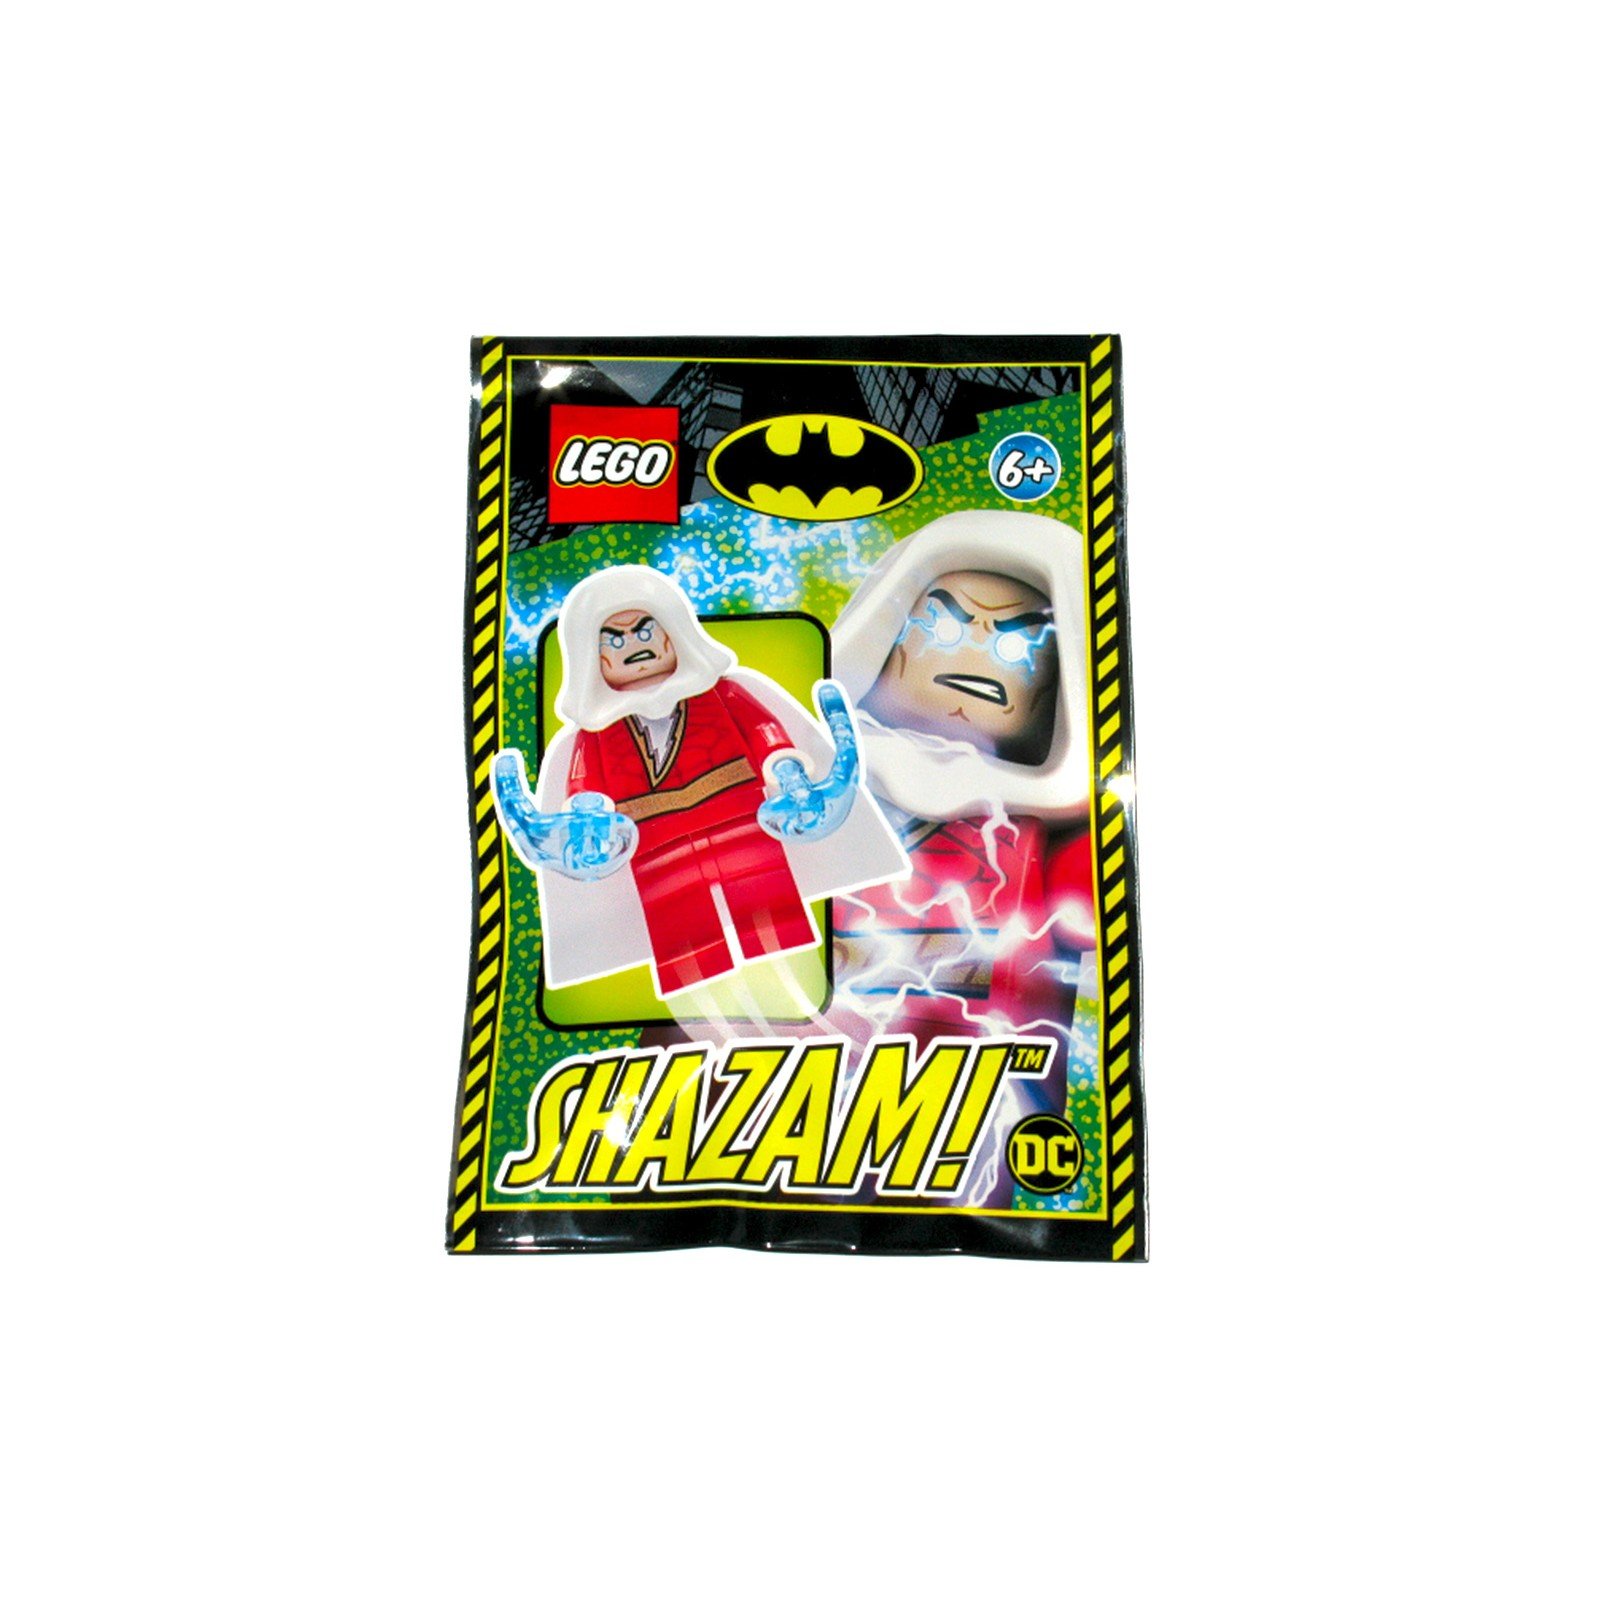 Shazam! - Polybag LEGO® DC Comics 212012